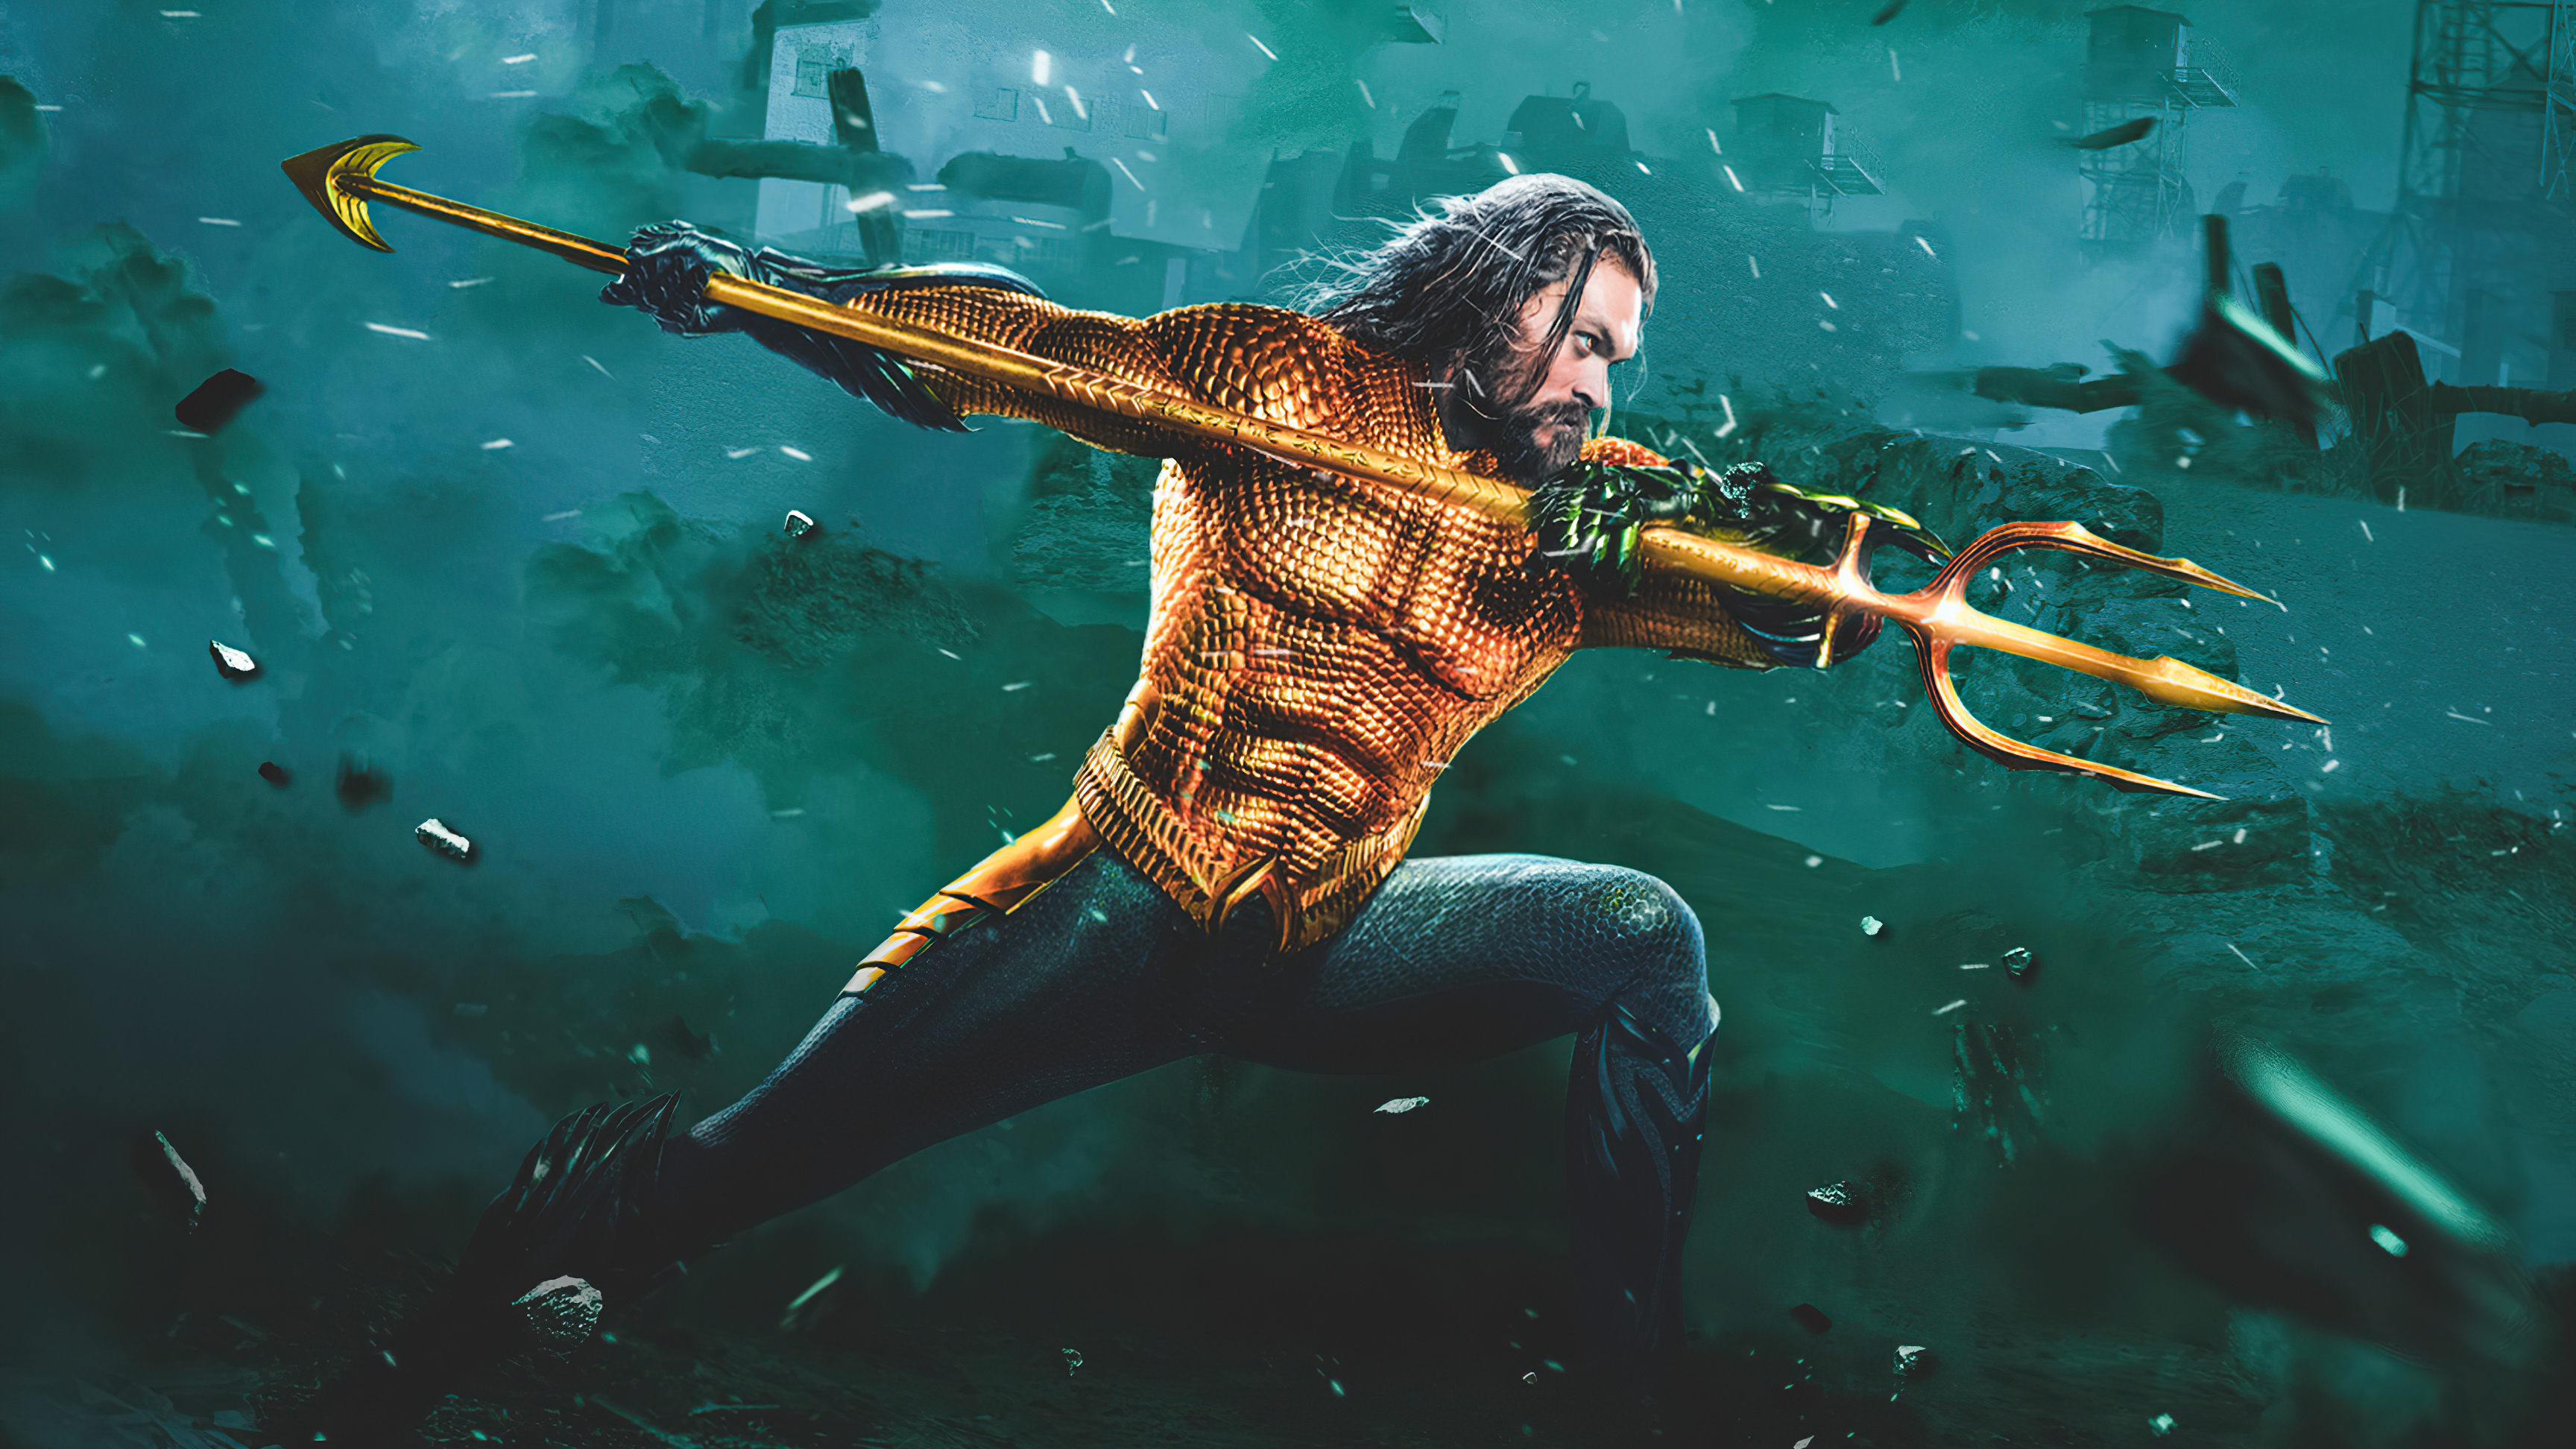 Aquaman And The Lost Kingdom 4K wallpaper download